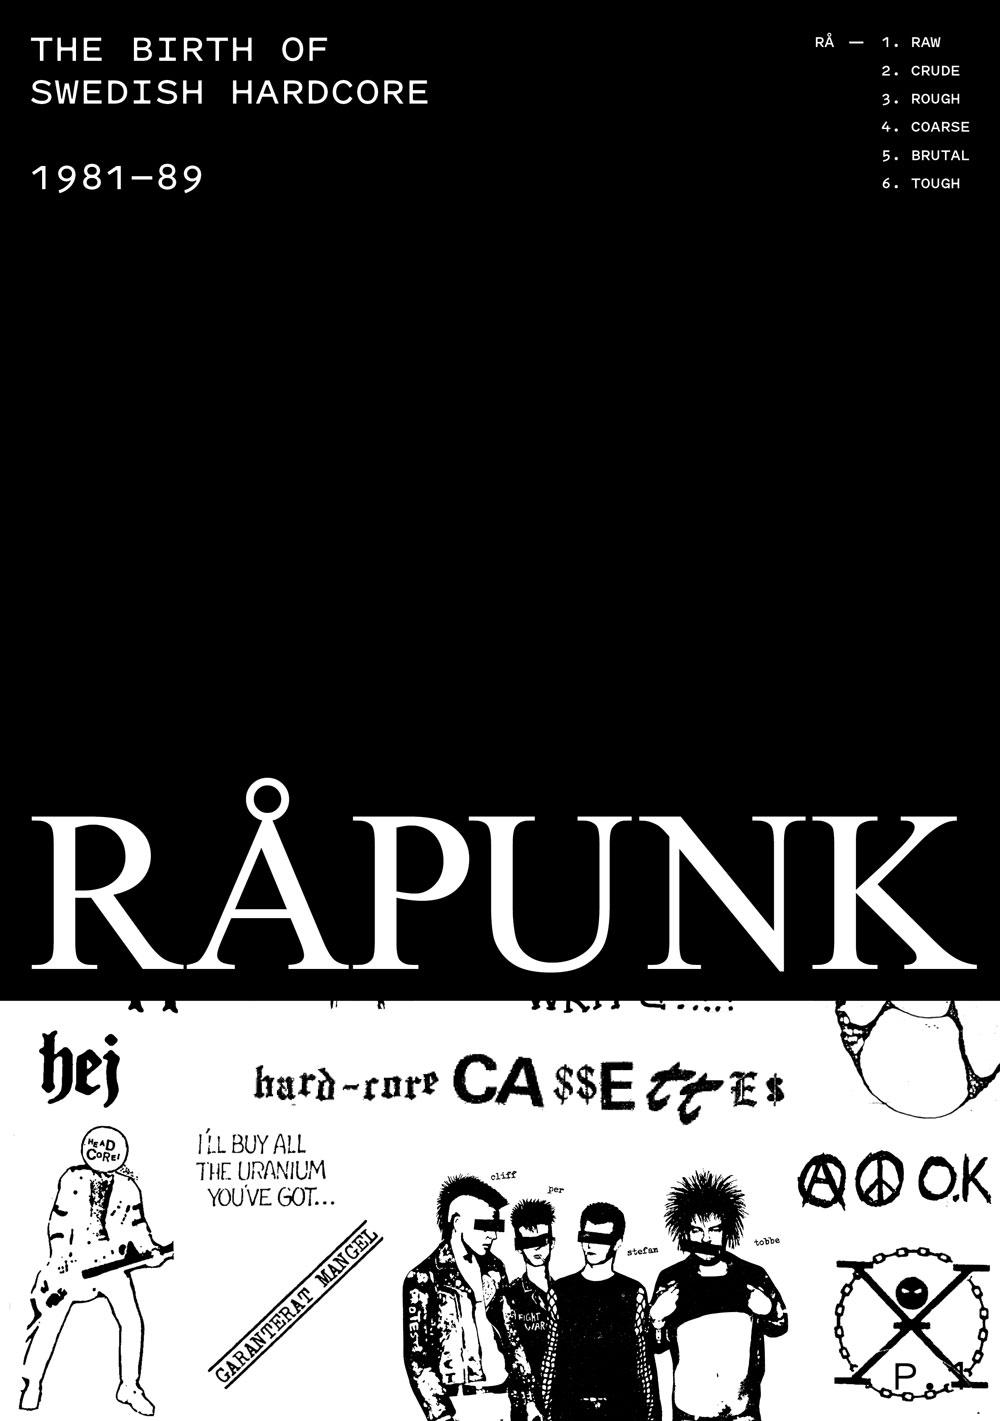 RAPUNK-The-birth-of-Swedish-hardcore-1981-89-book